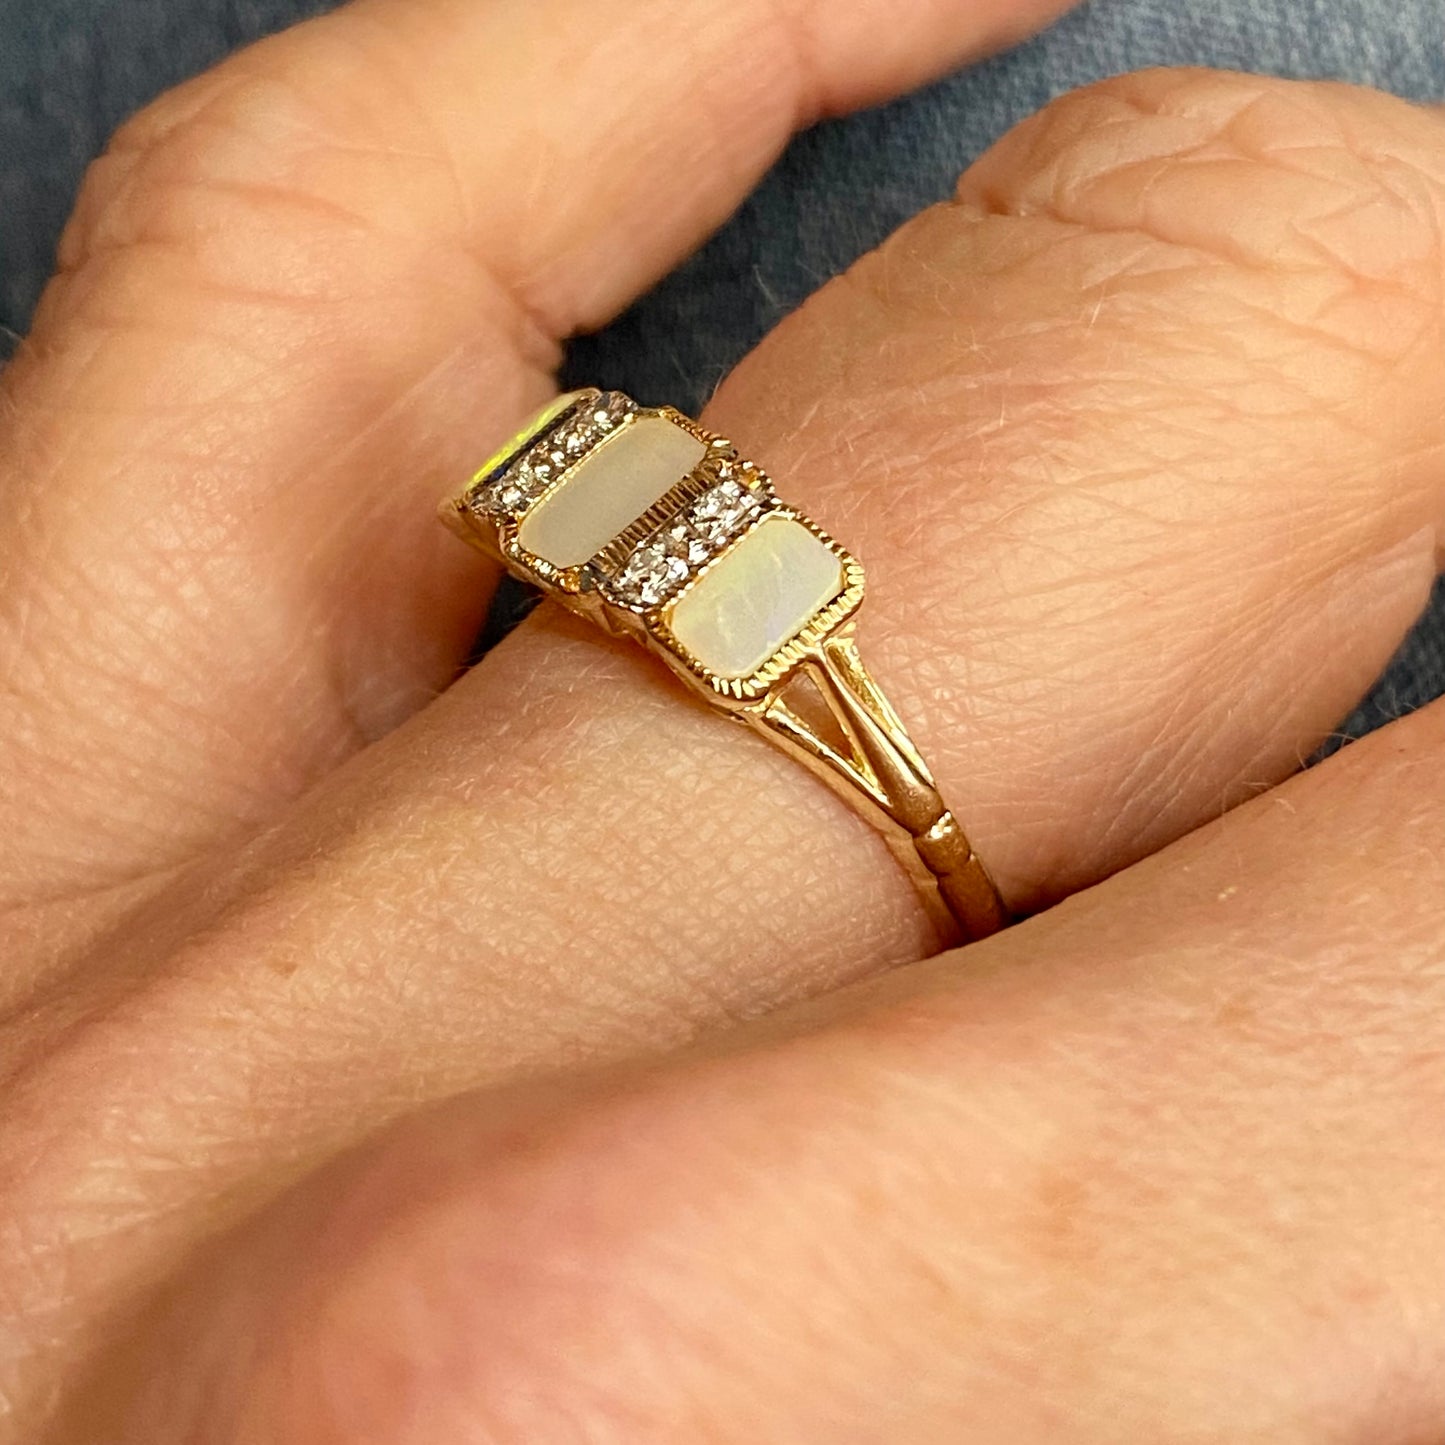 9ct Gold Gem Opal & Diamond Ring - John Ross Jewellers